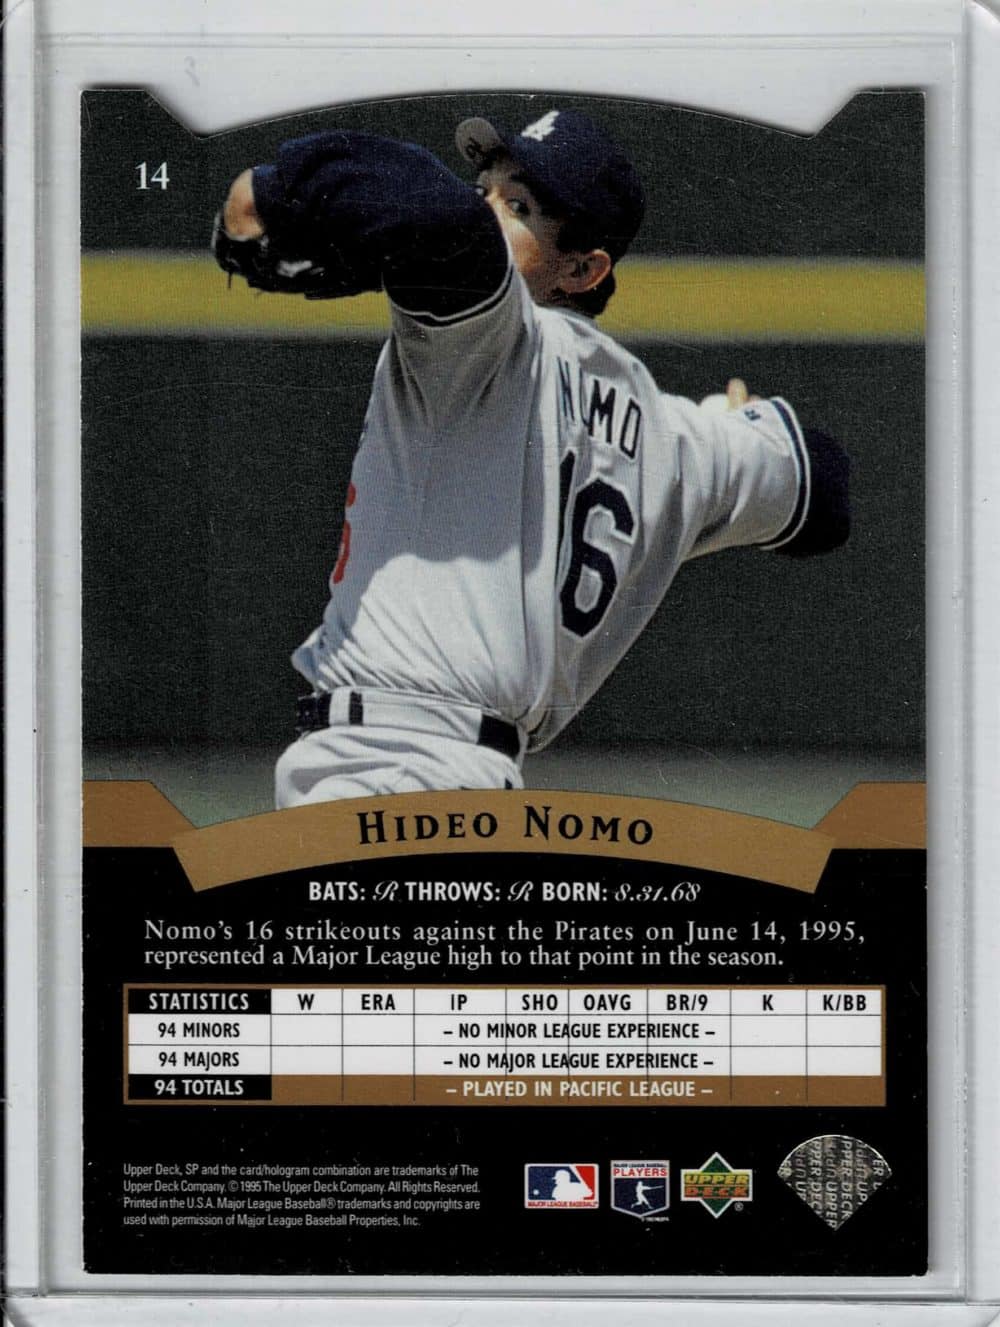 Hideo Nomo Baseball Stats by Baseball Almanac